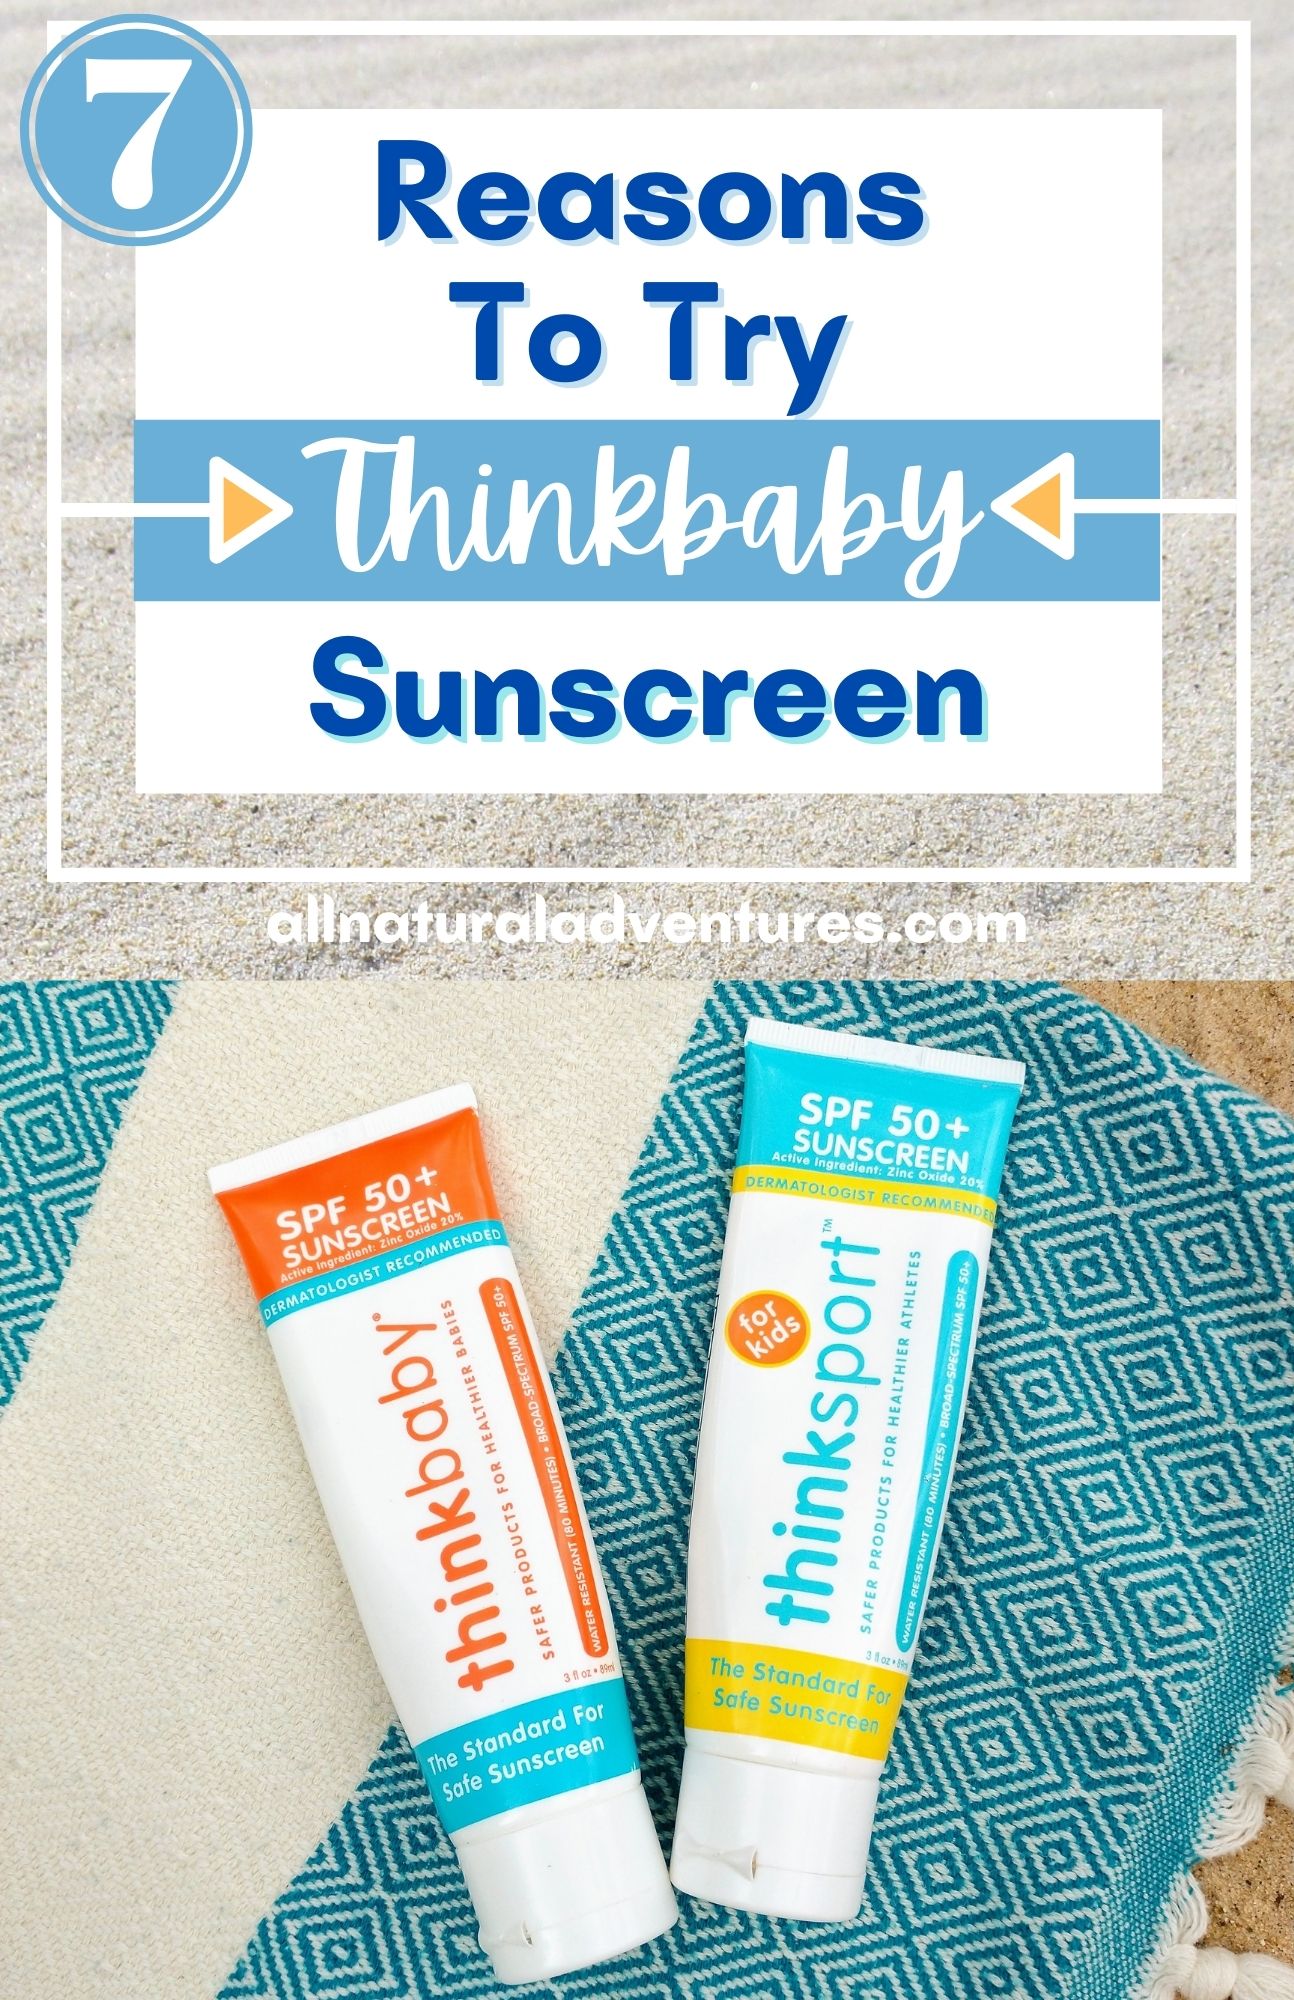 babyganics vs thinkbaby sunscreen